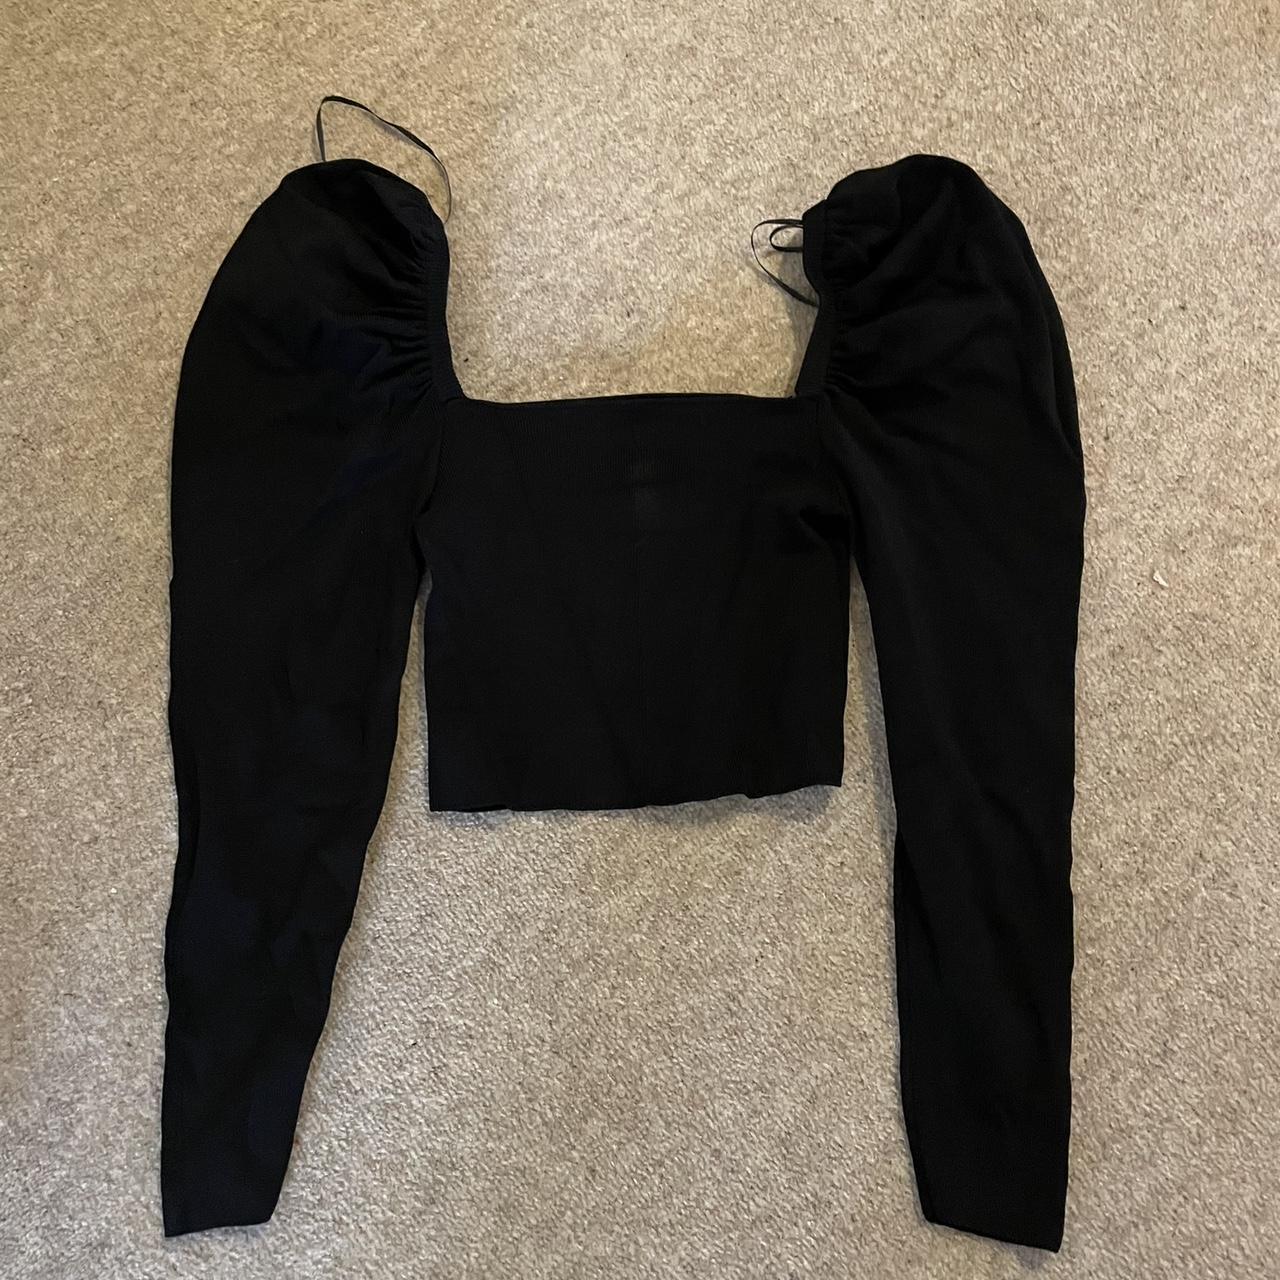 Zara Black Ribbed Knit Ultra High Cut Square Neck - Depop